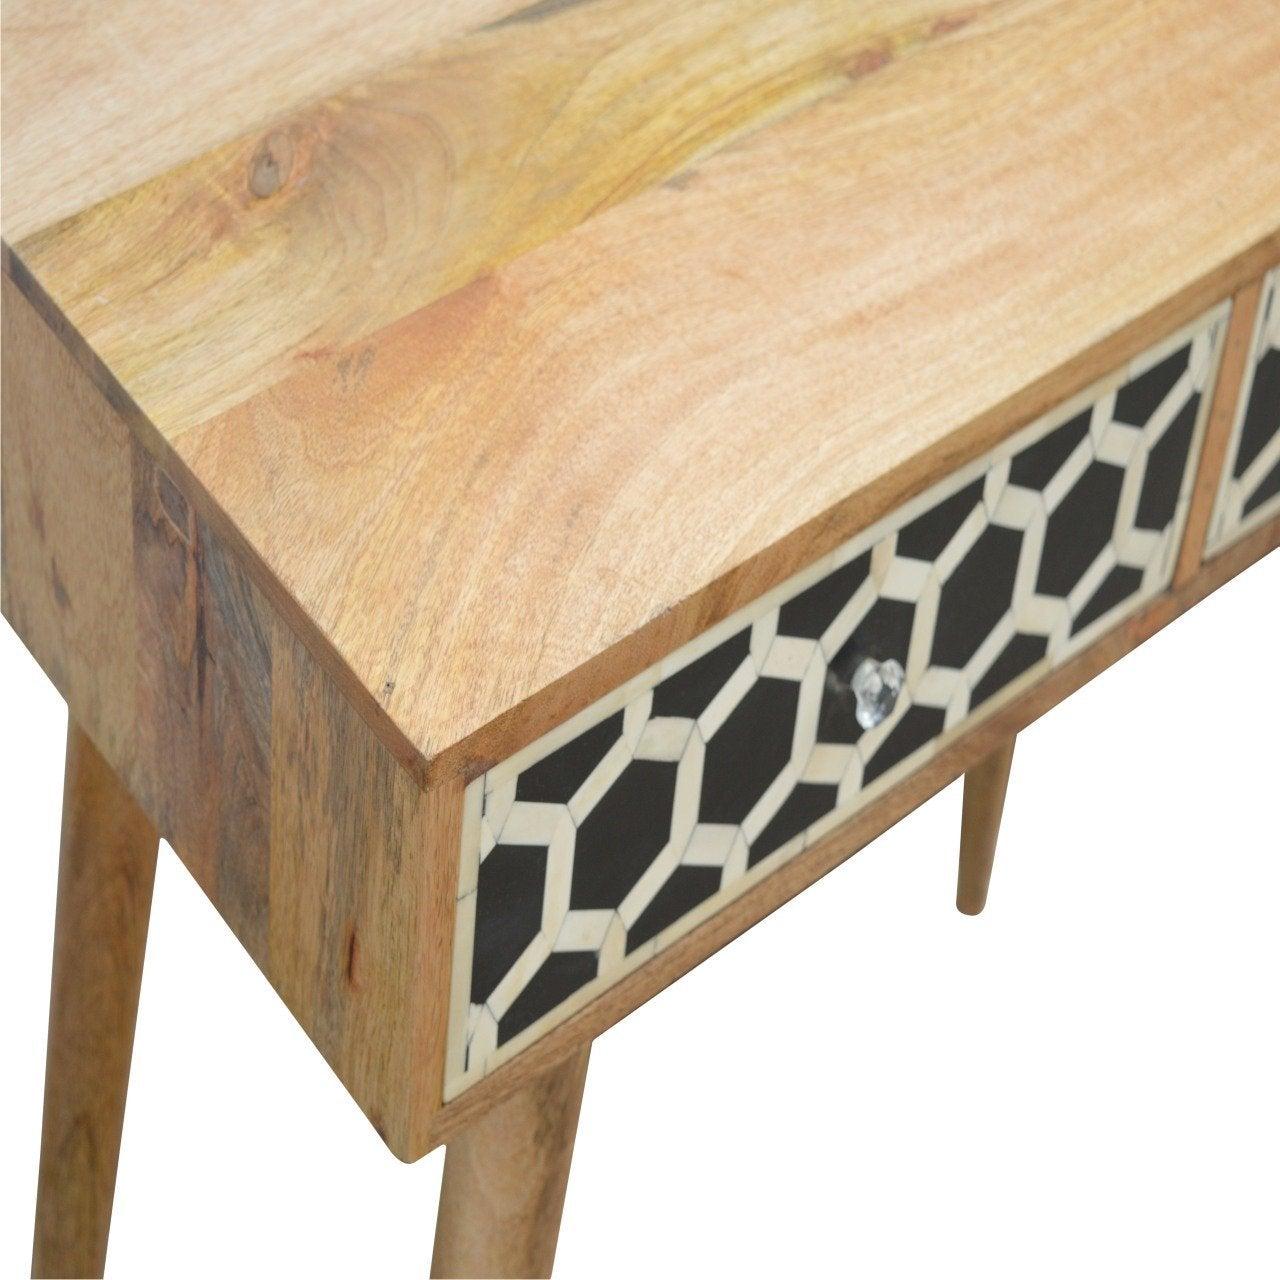 Bone inlay console table - crimblefest furniture - image 6